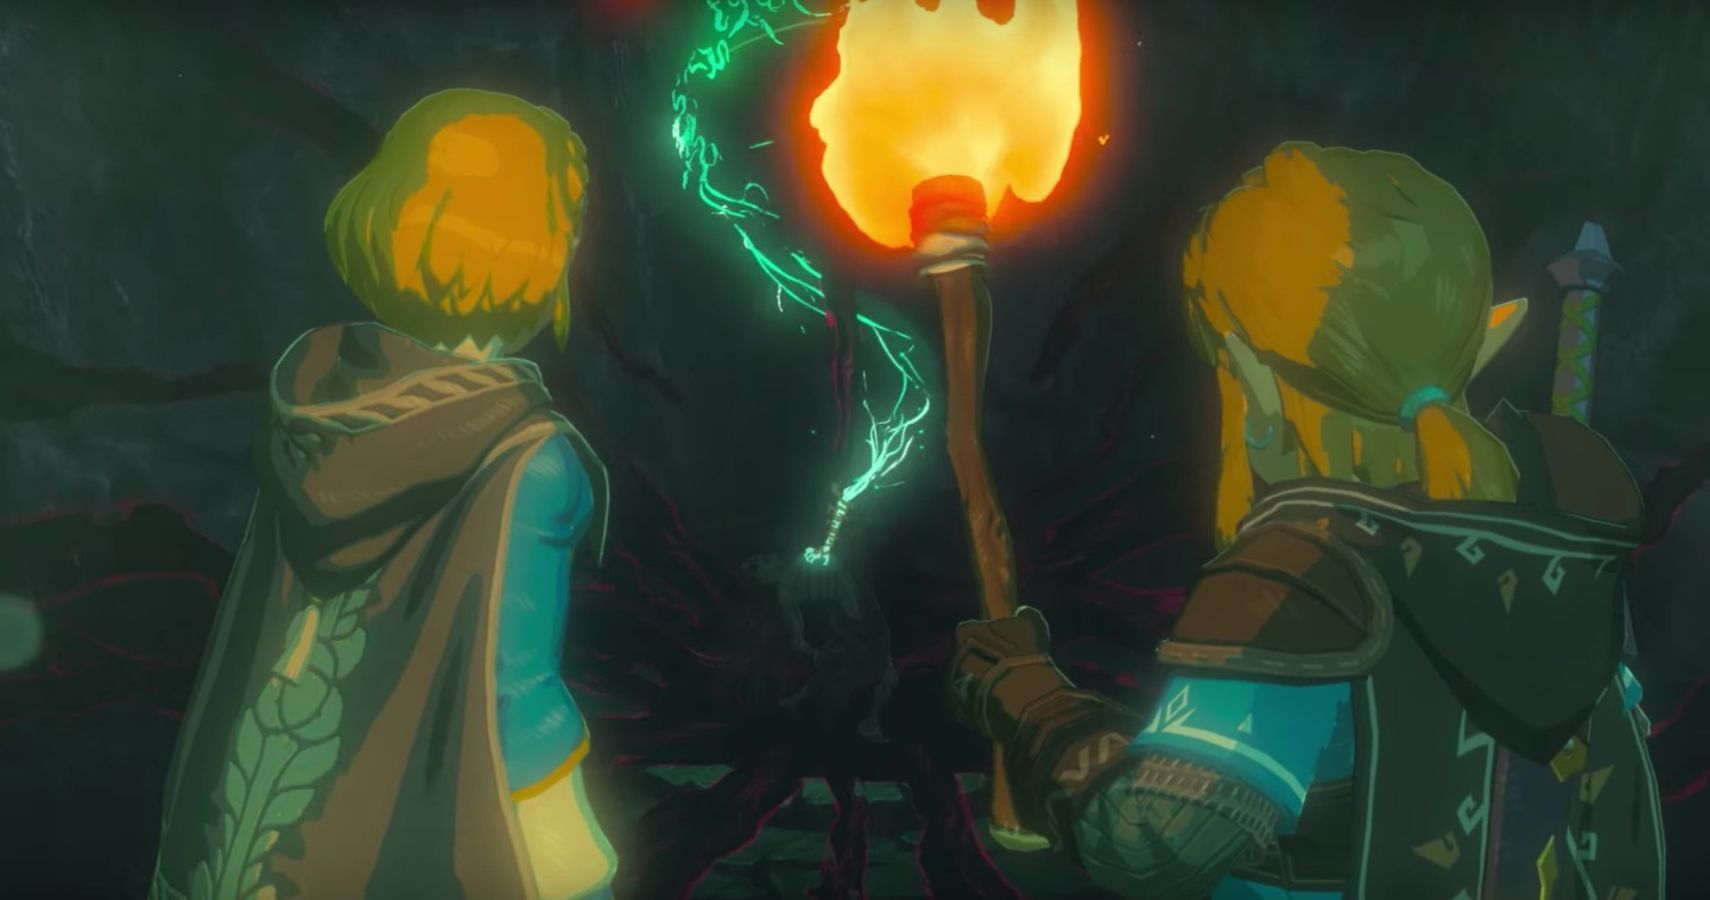 Zelda Breath of the Wild 2 release date confirmed for 2020 launch